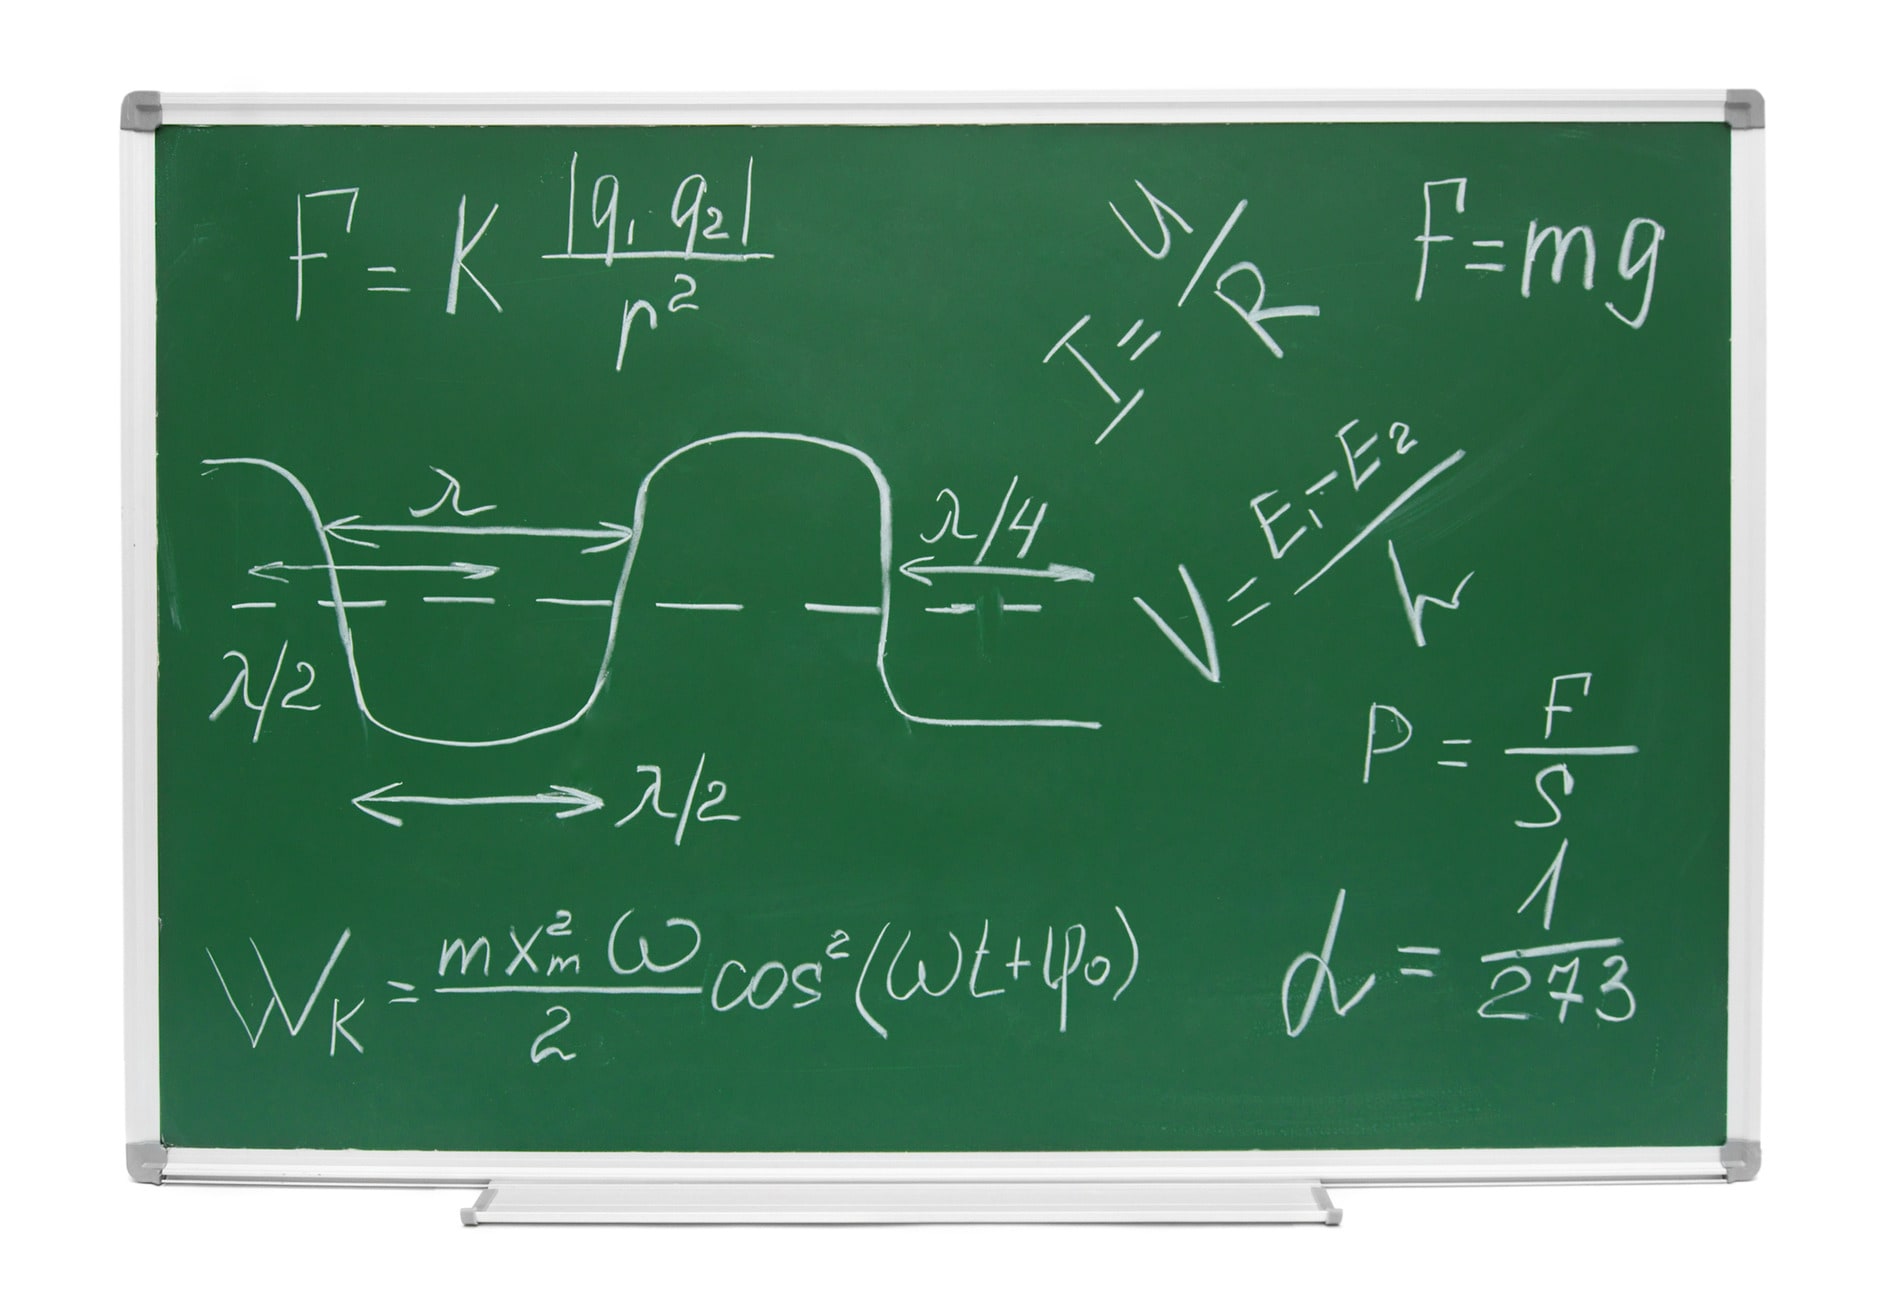 Physics equations on a chalkboard